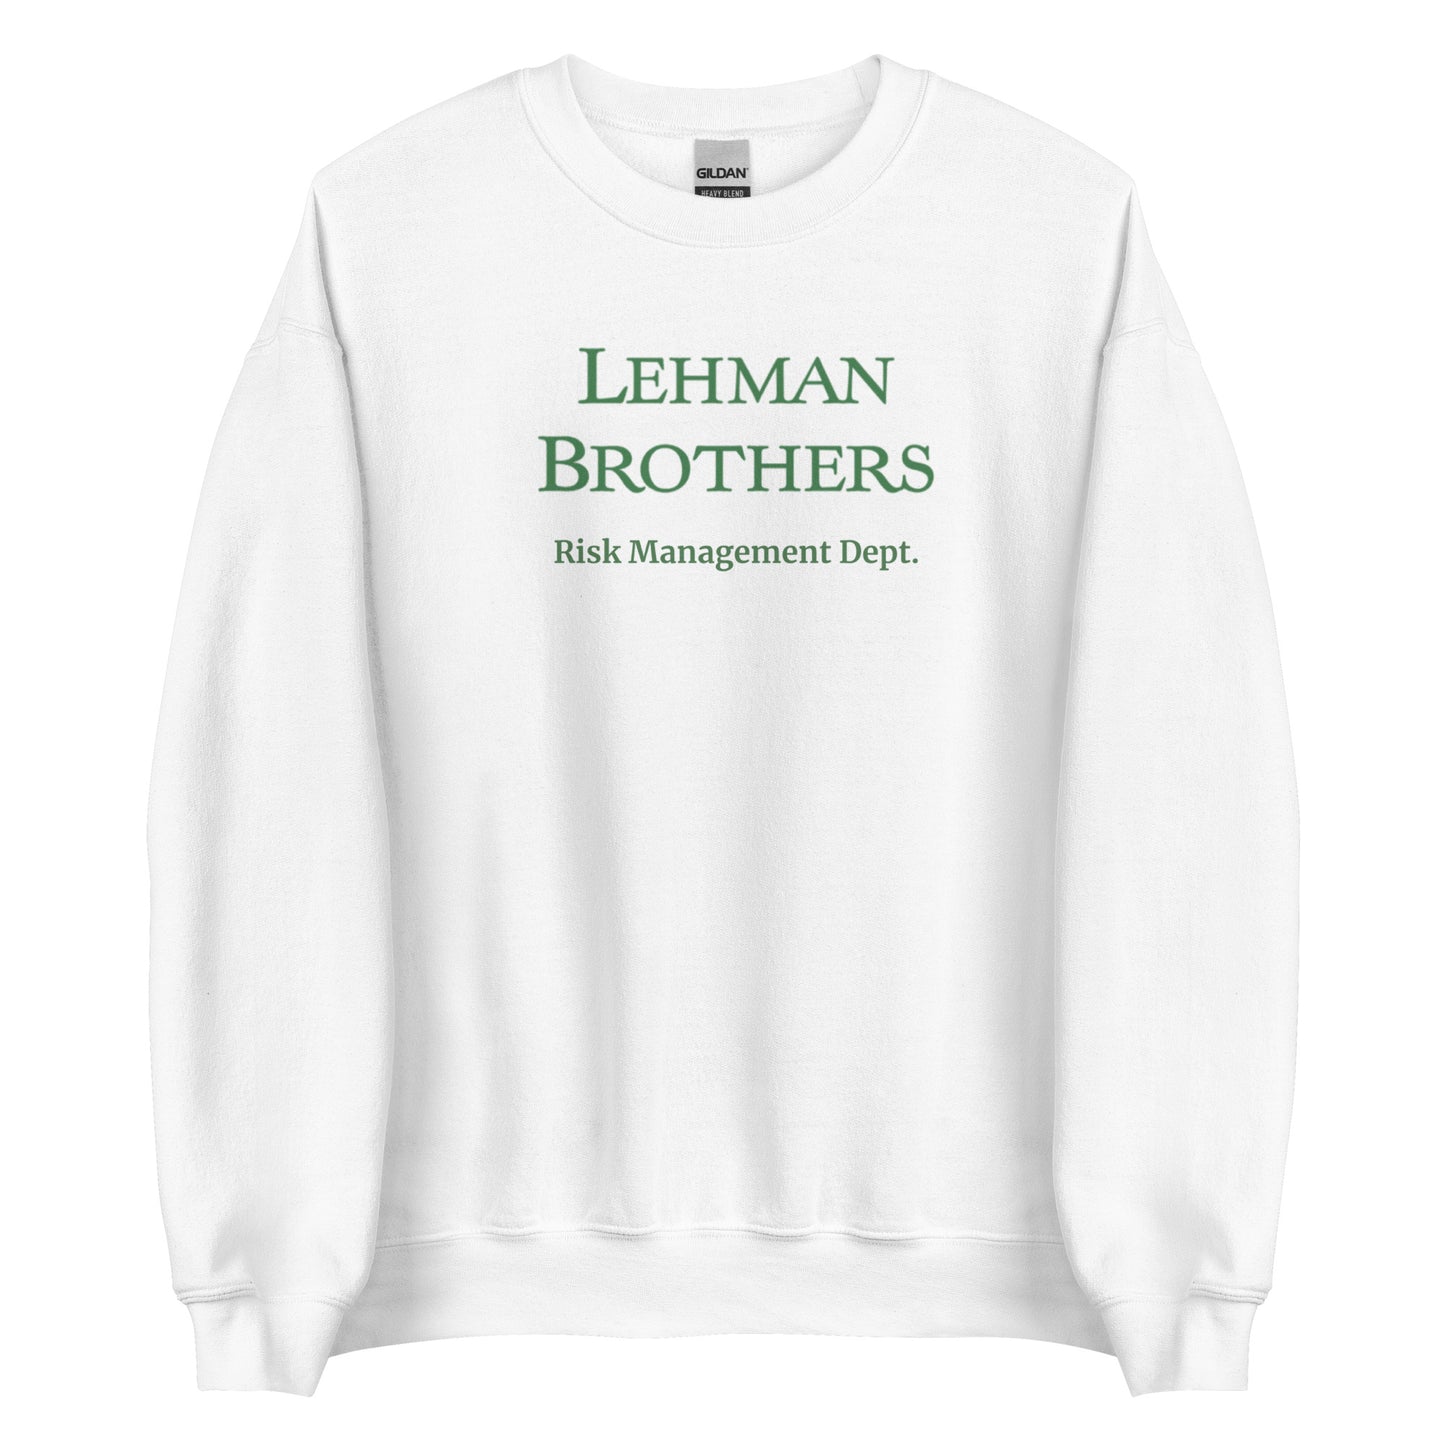 Lehman Brothers Risk Management Dept. Unisex Sweatshirt